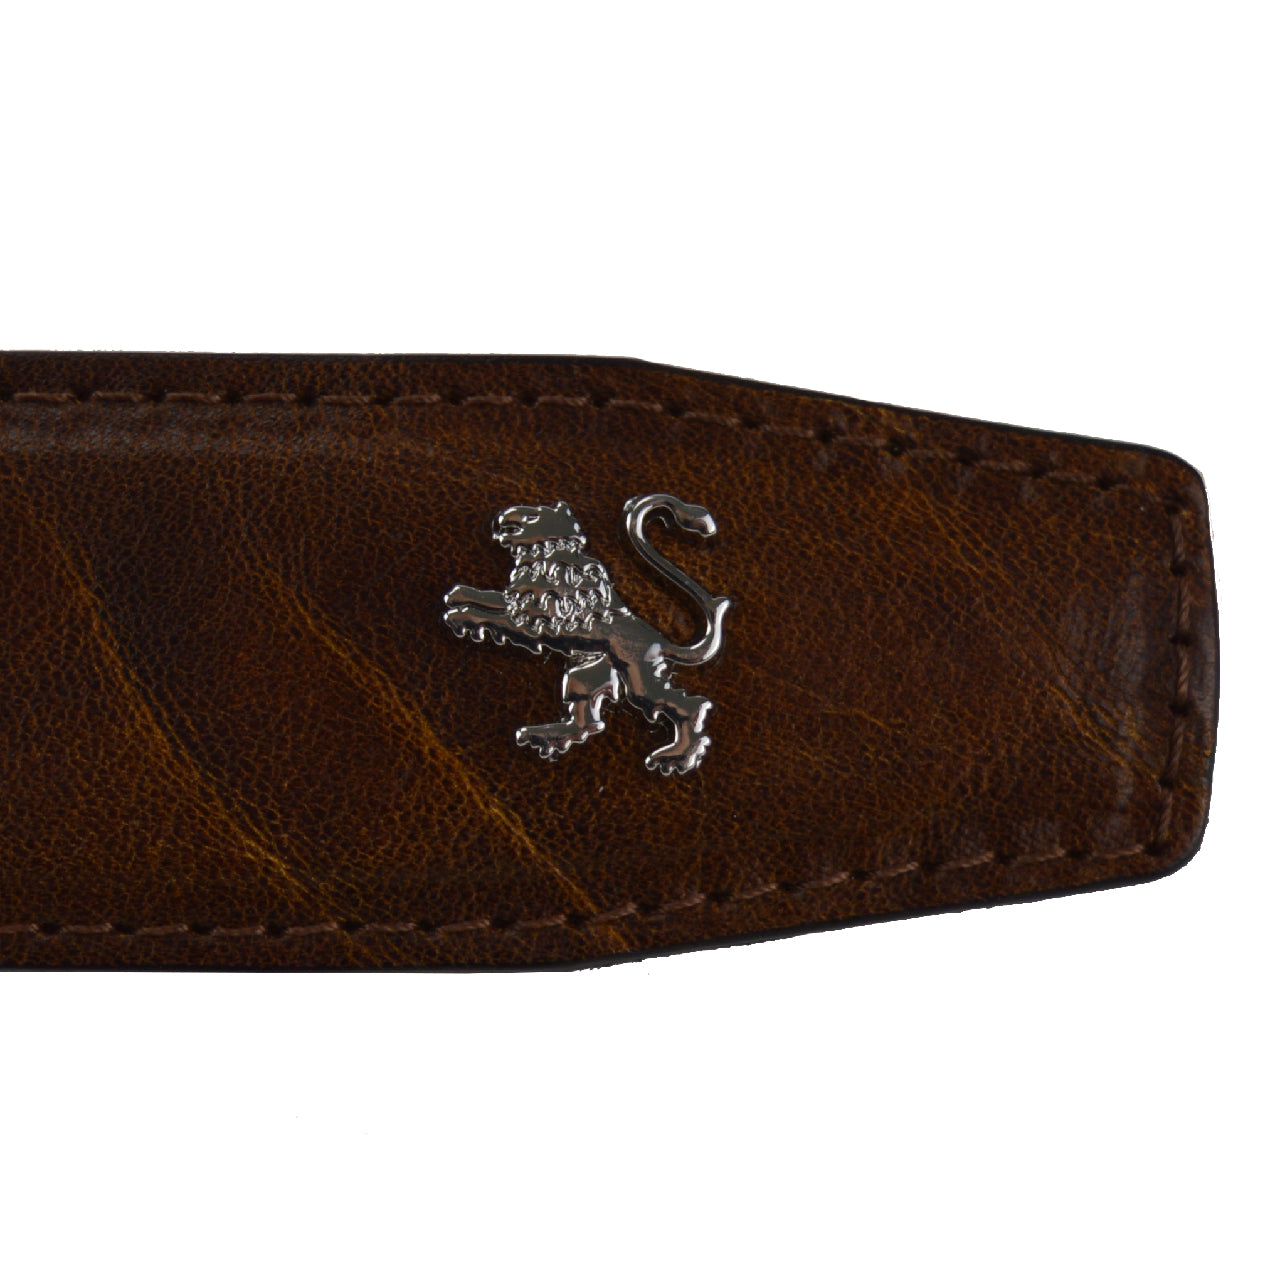 Pratesi Belt in genuine Italian leather